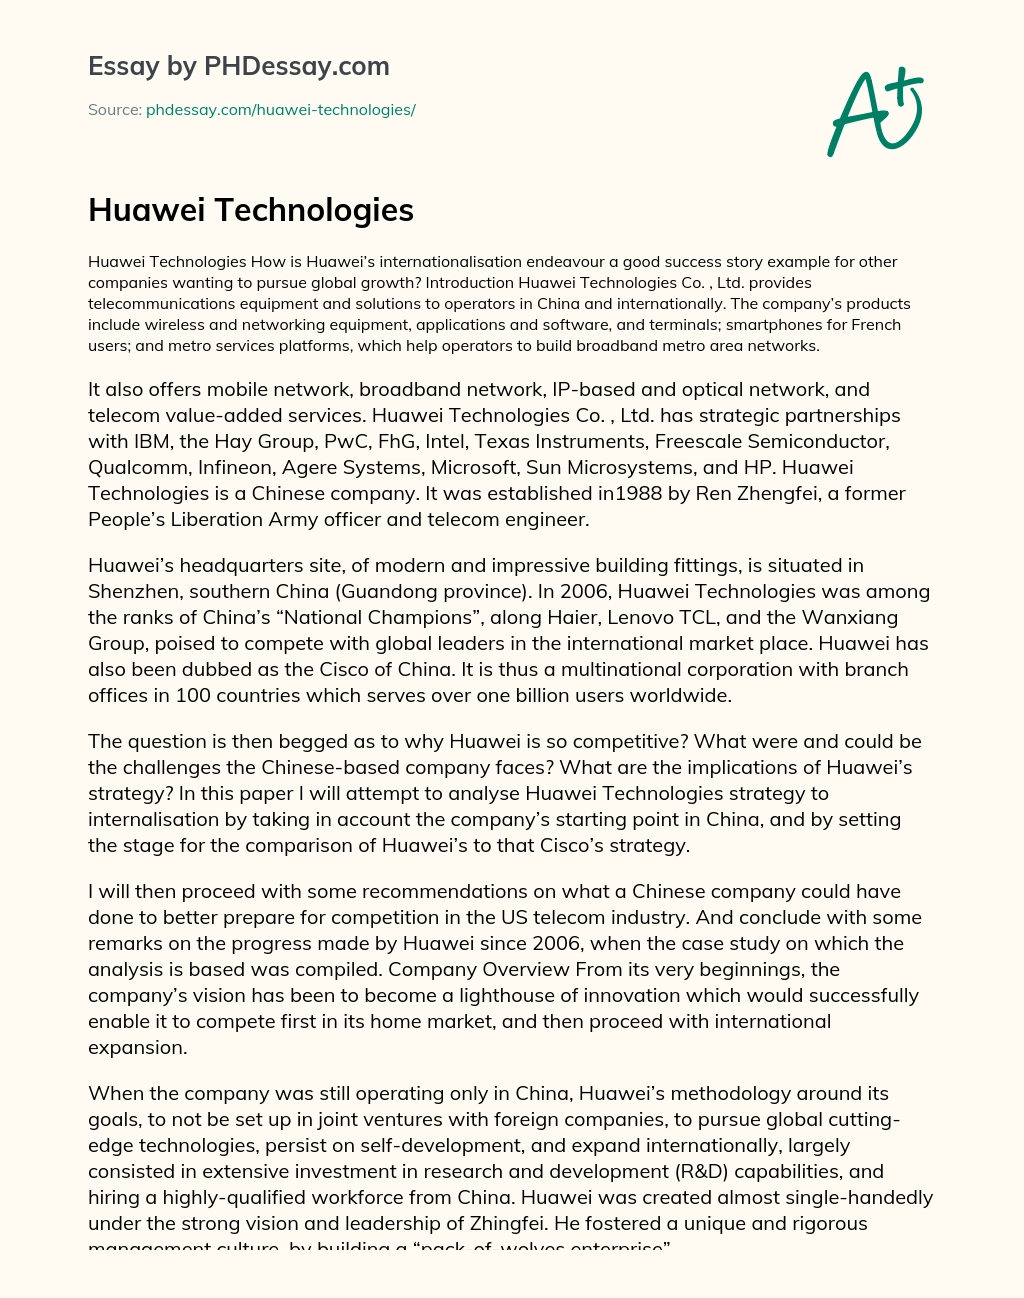 Huawei Technologies essay